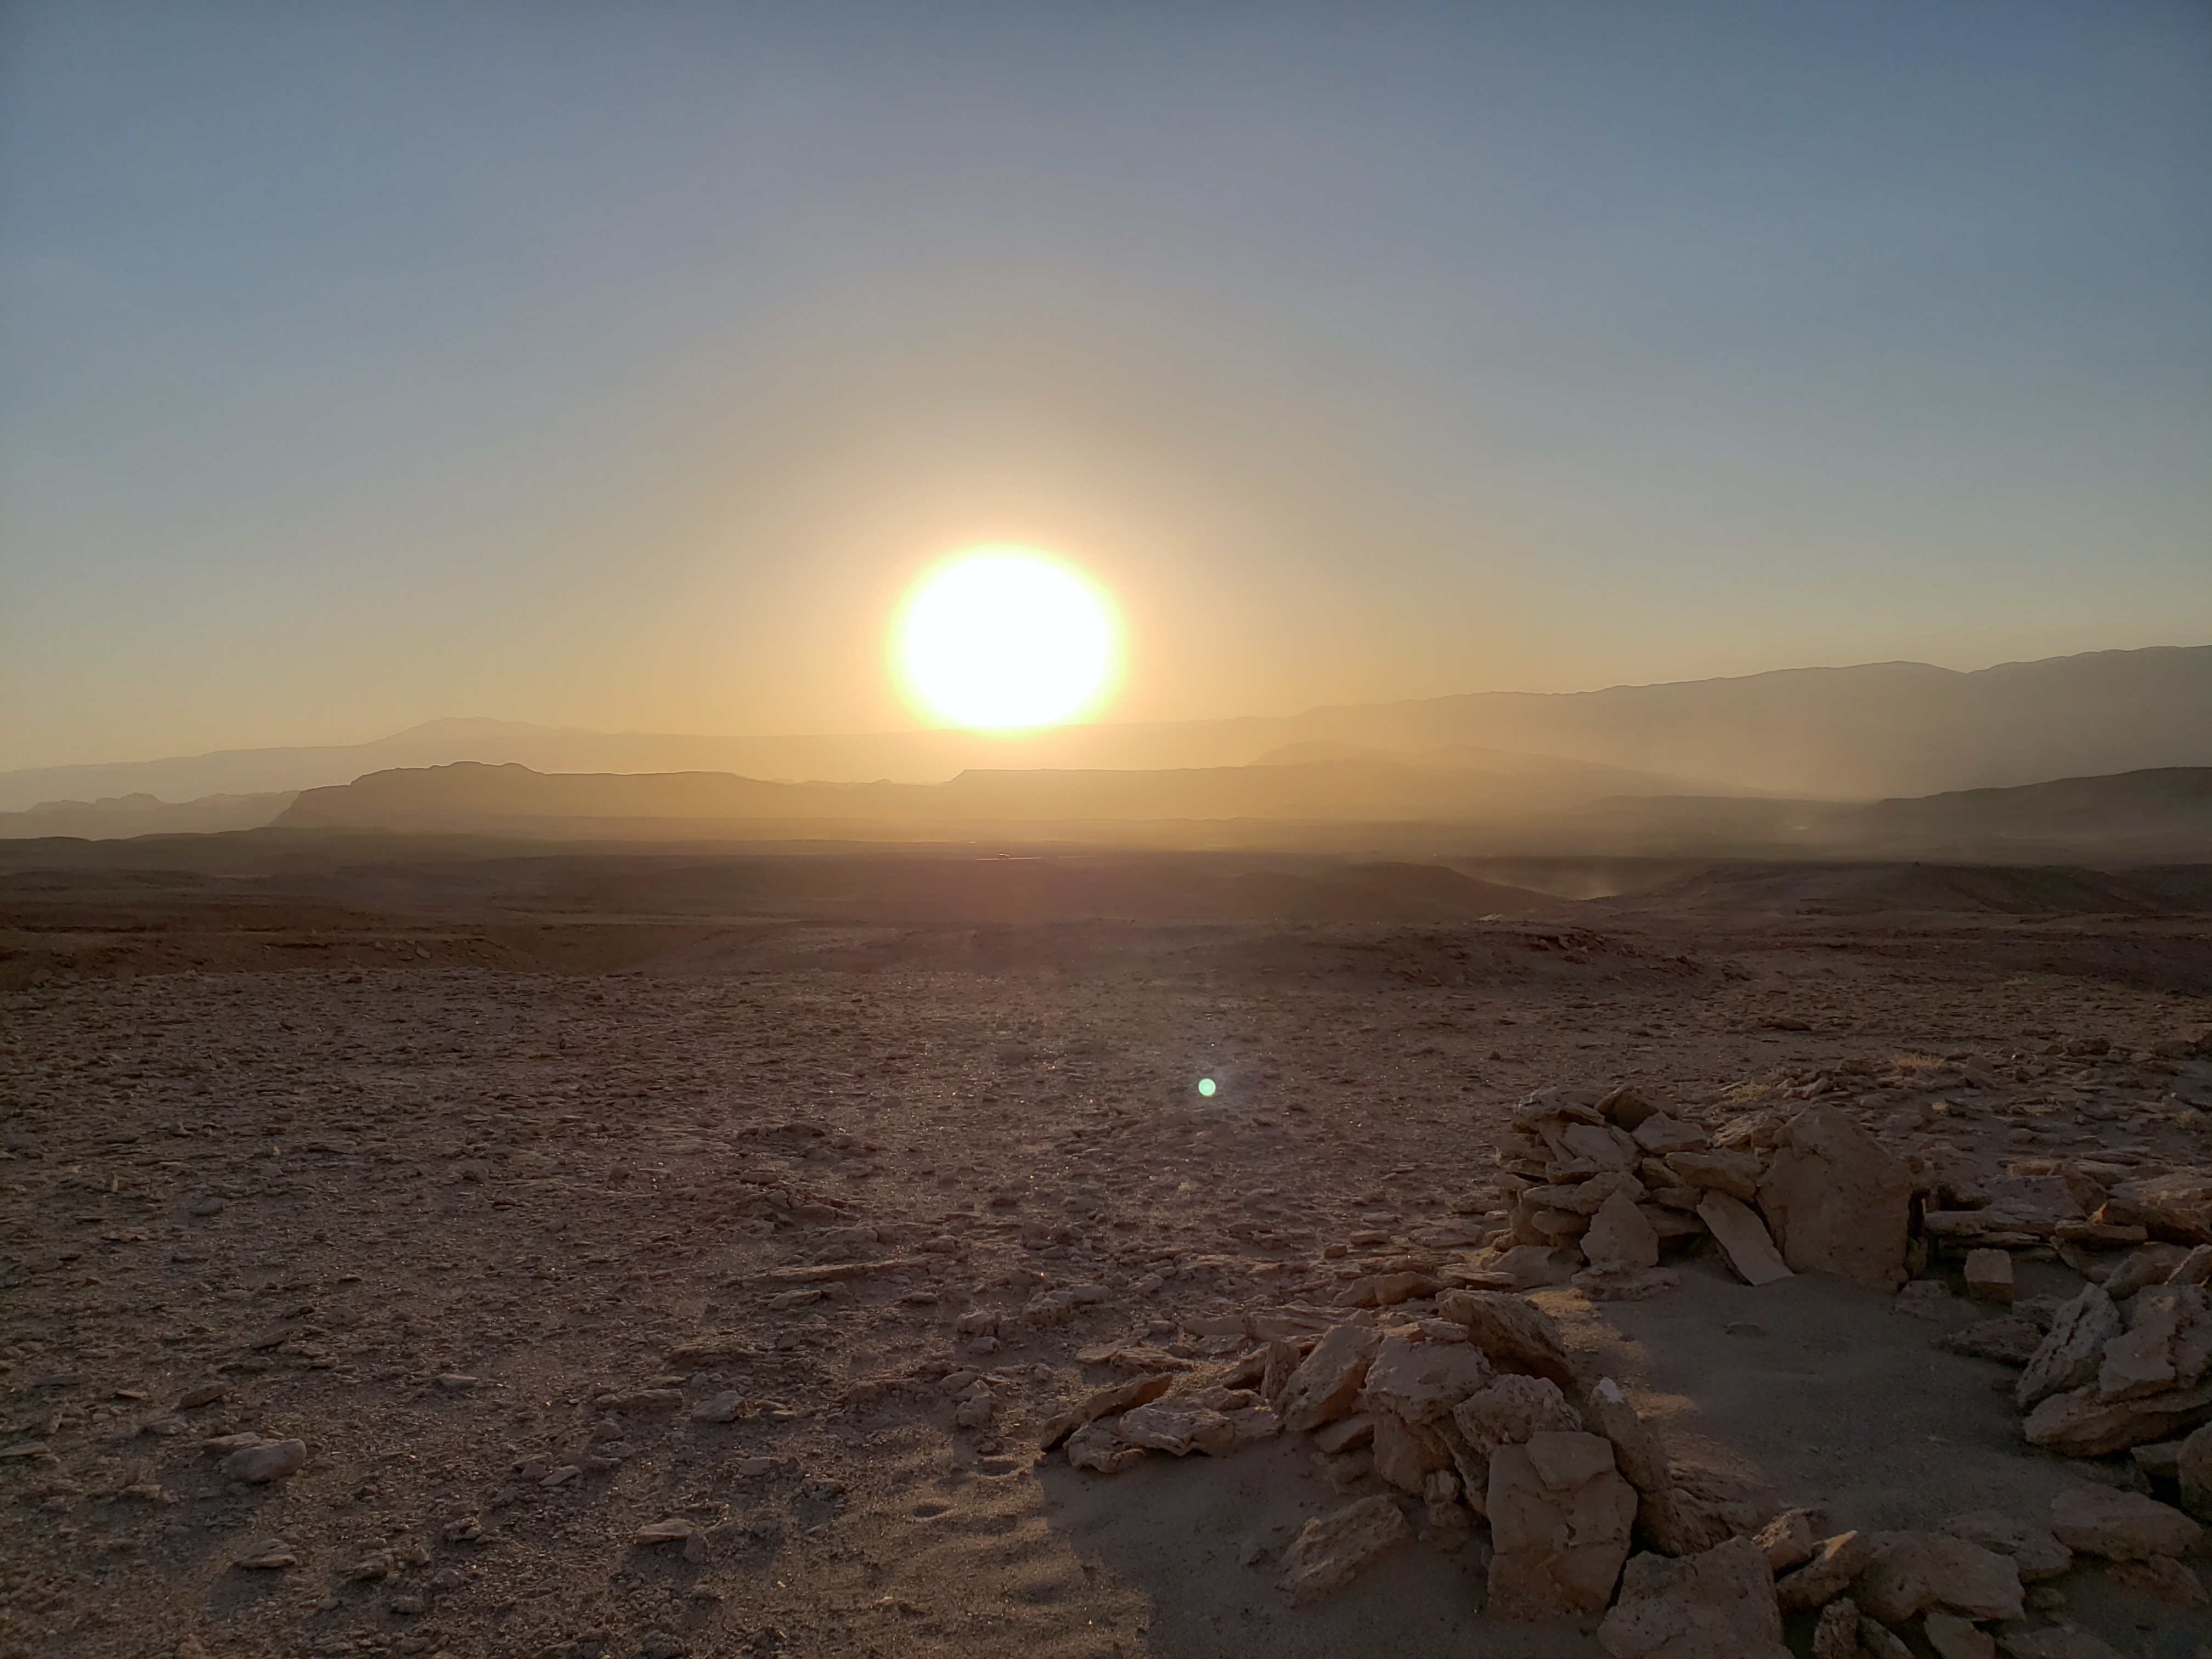 Sunset, the Coyote Stone (la Piedra del Coyote) at 2,580m., the Valley of the Moon (Valle de la Luna), San Pedro de Atacama, the Atacama Desert, Chile.